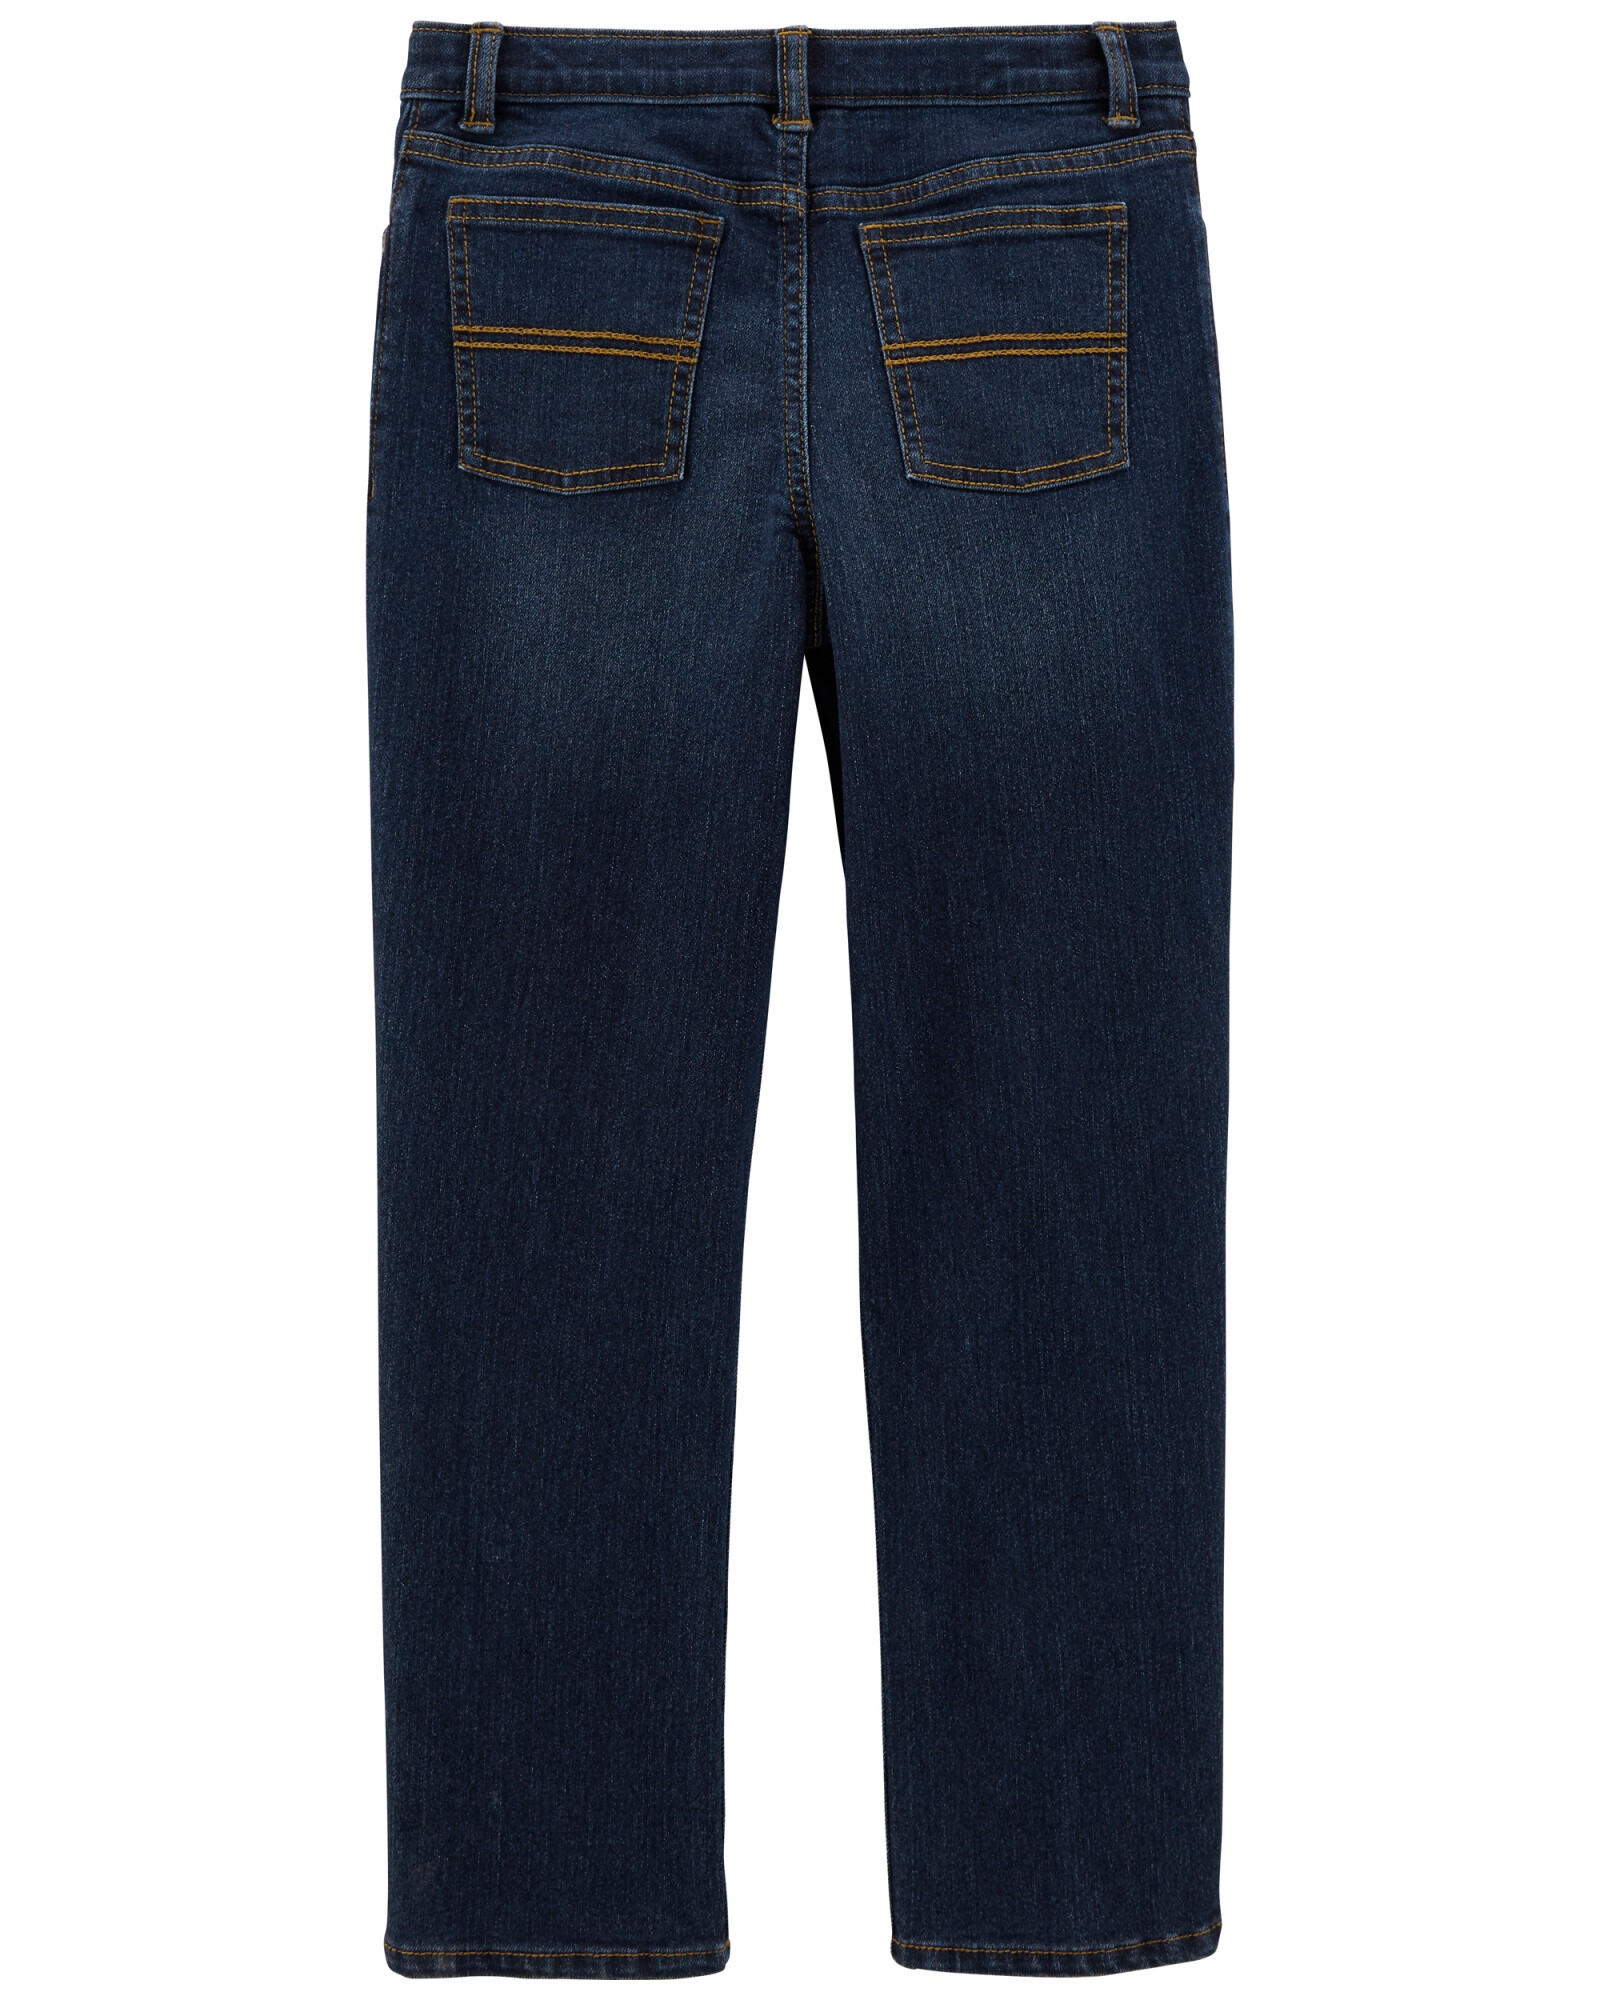 Pantalón de jean clásico. Talles 5-8 Sin color